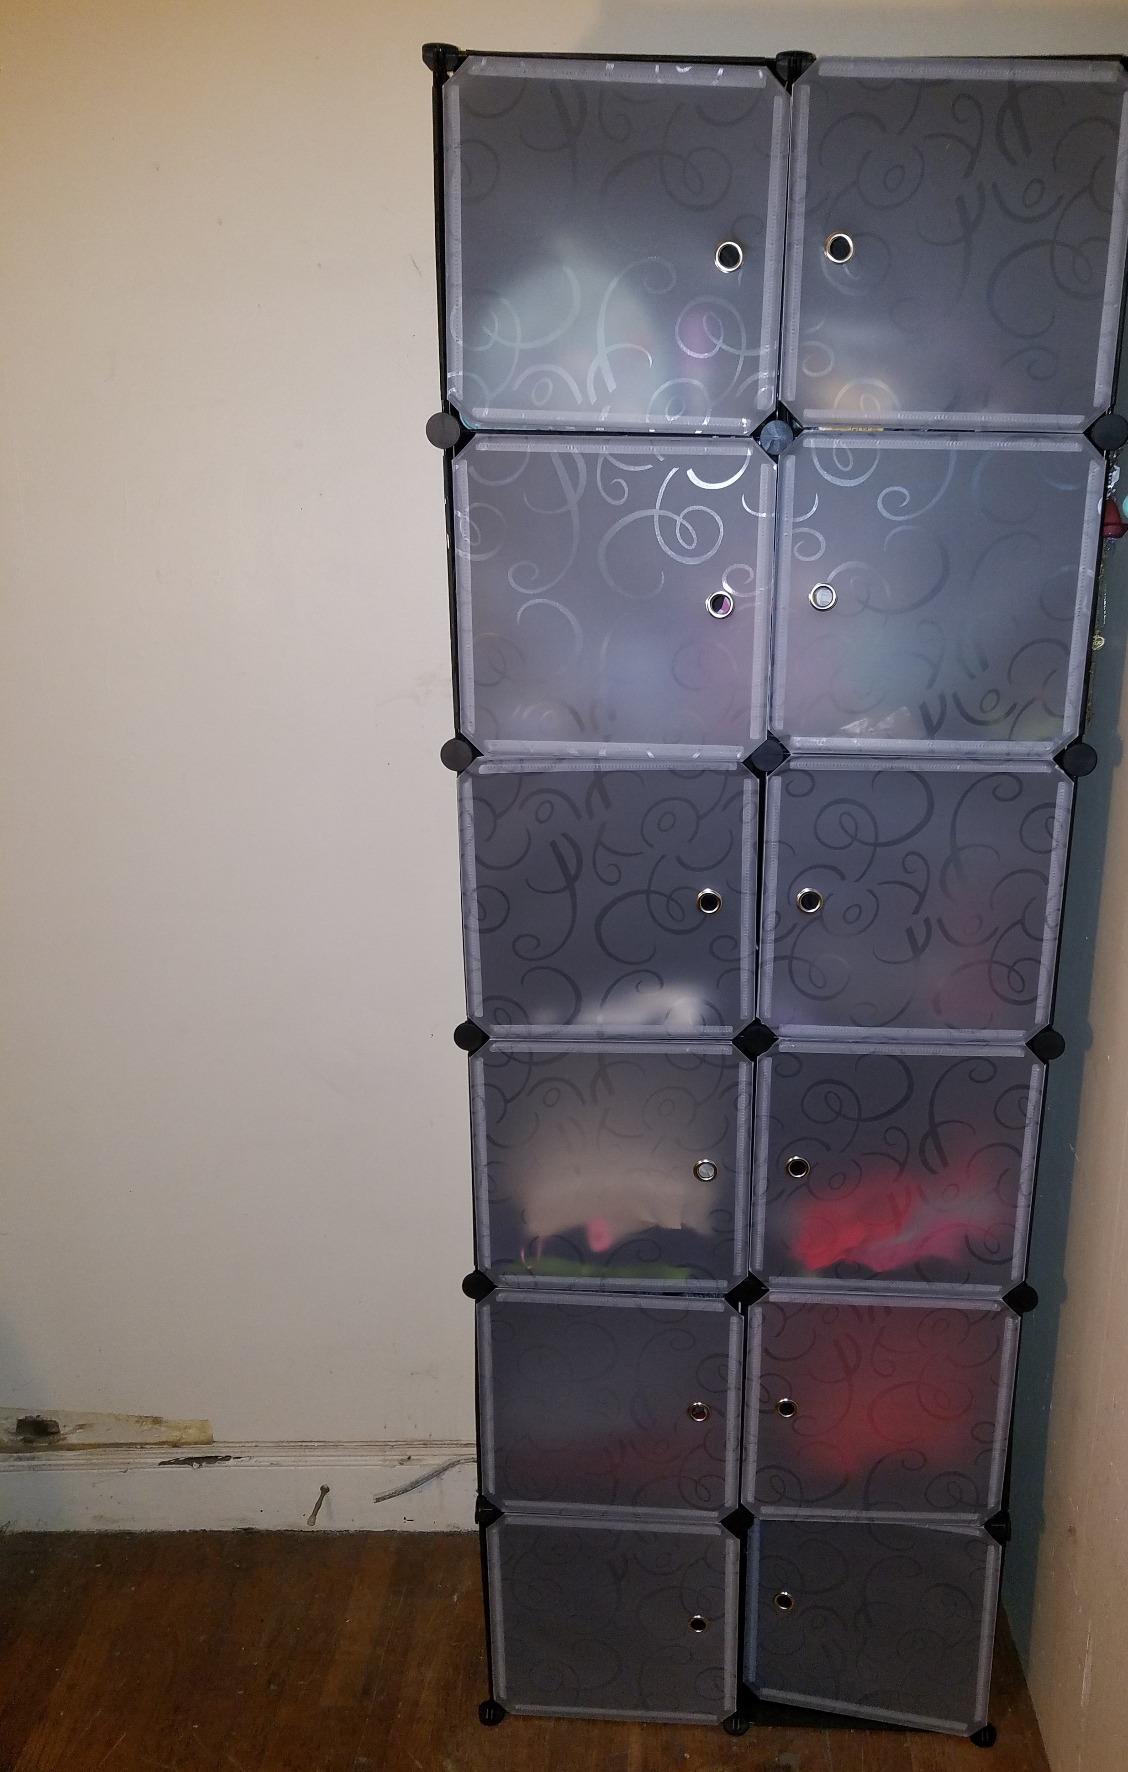 DIY 12 Cube Portable Closet Storage Organizer - Costway